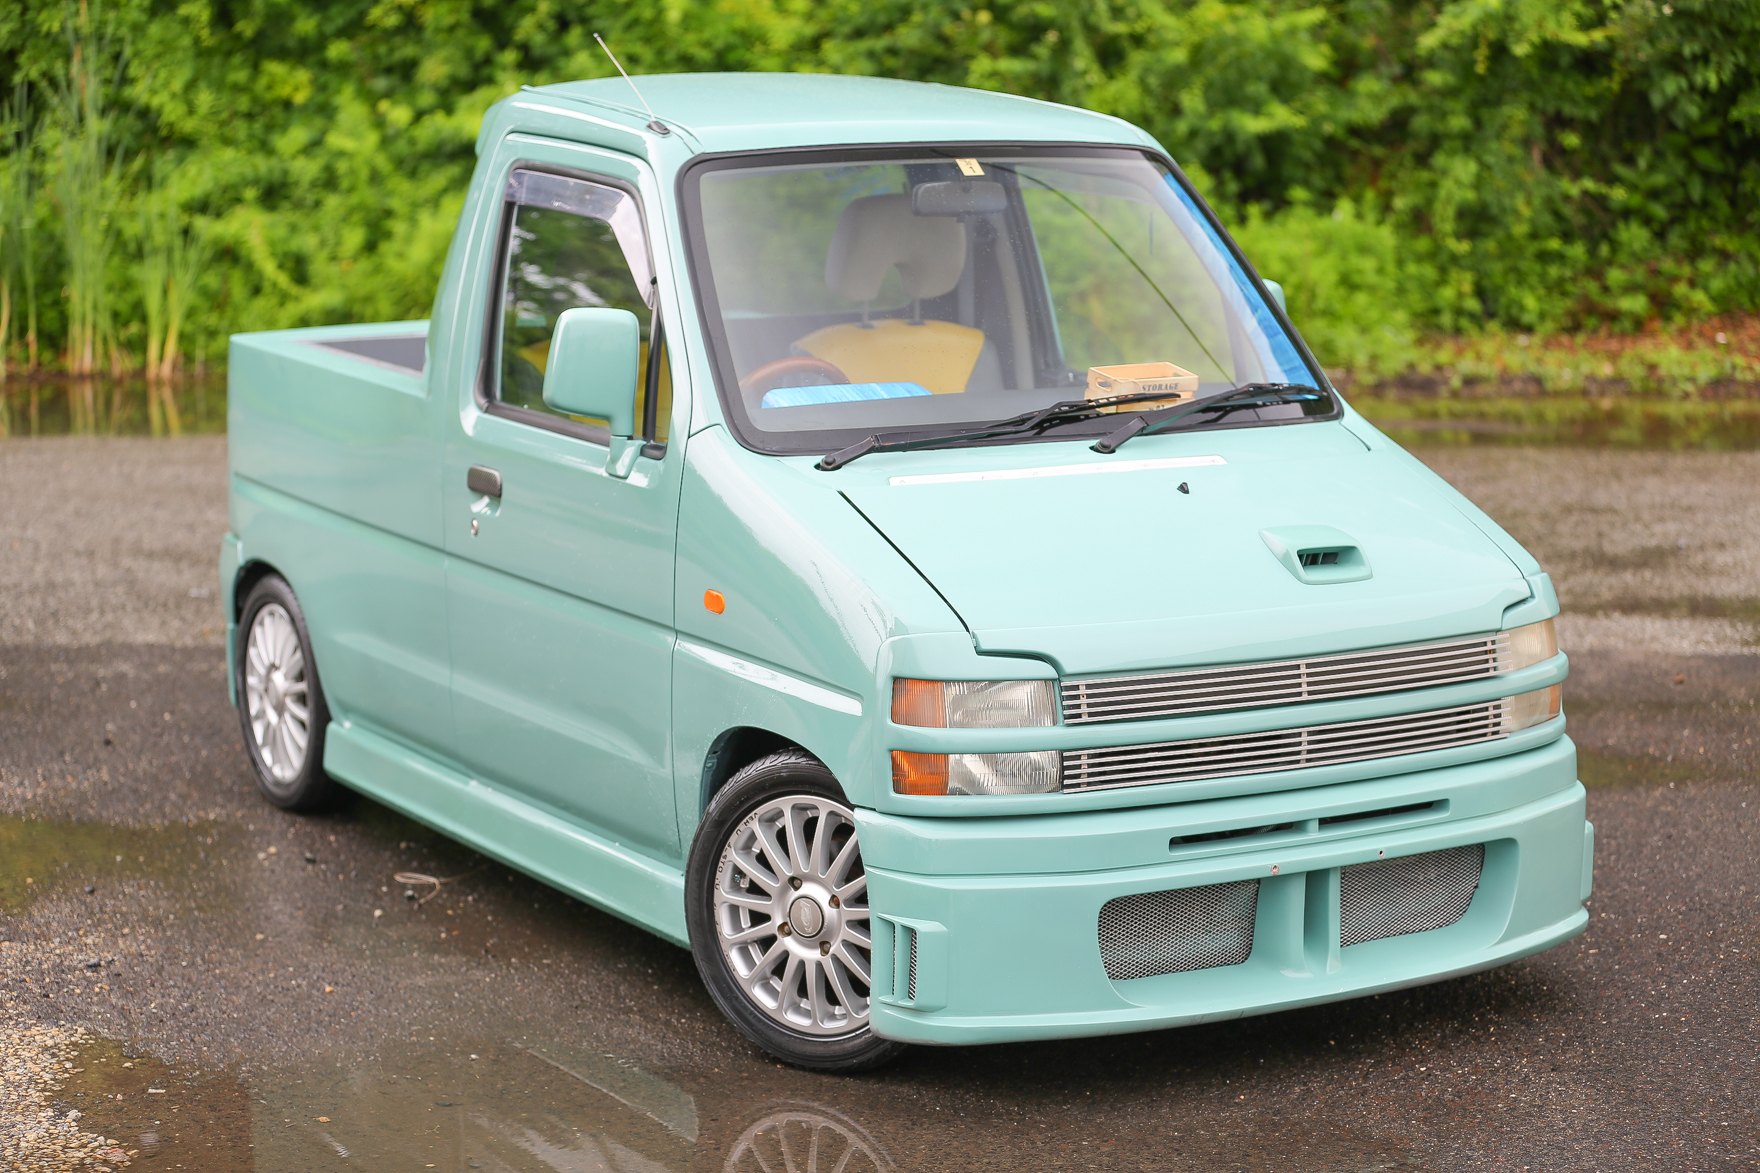 1995 Suzuki WagonR RT-S Turbo - $8,950